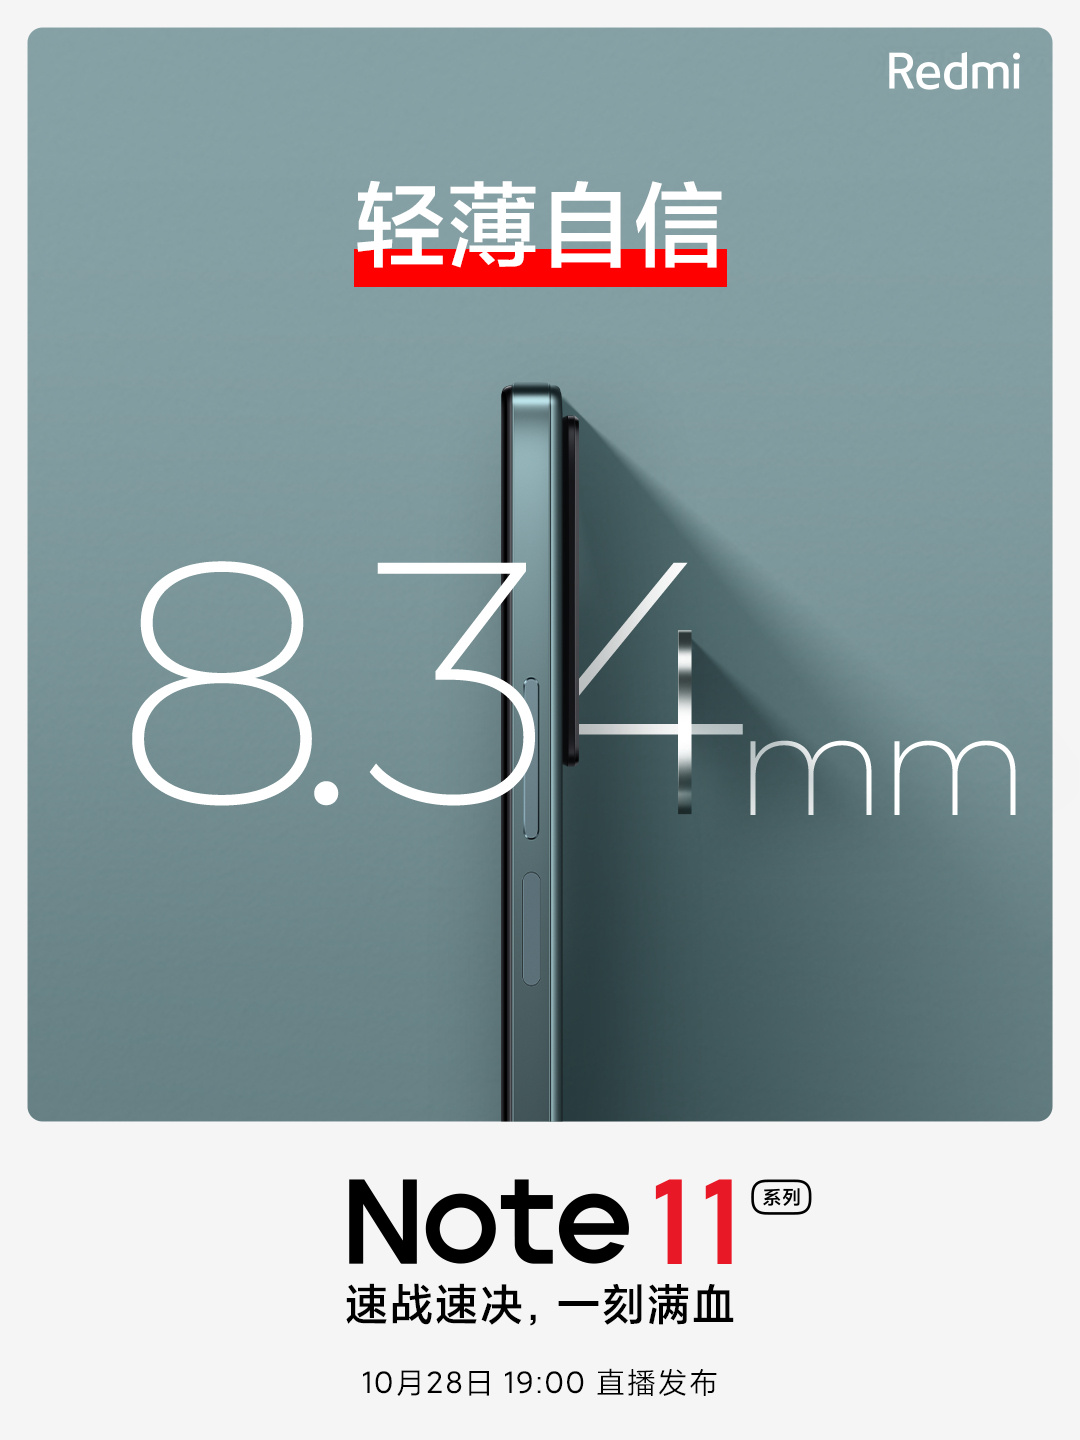 redmi-note-11-thickness.jpg